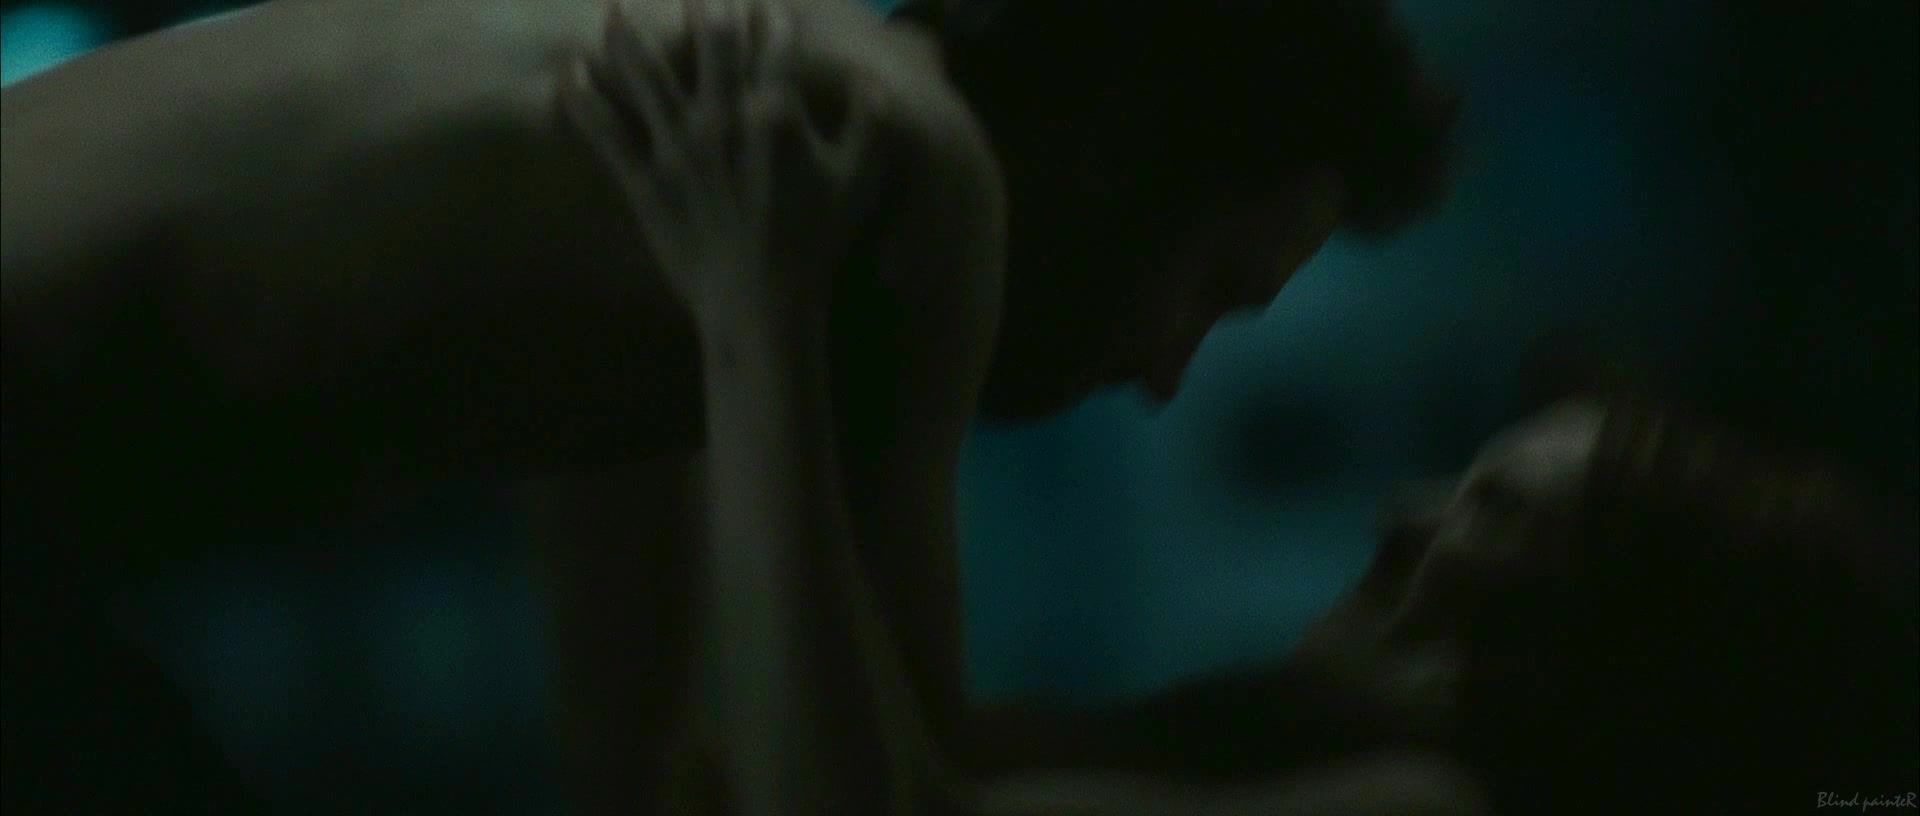 Nylons Sex video Lauren Lee Smith nude - Pathology (2008) Cums - 1